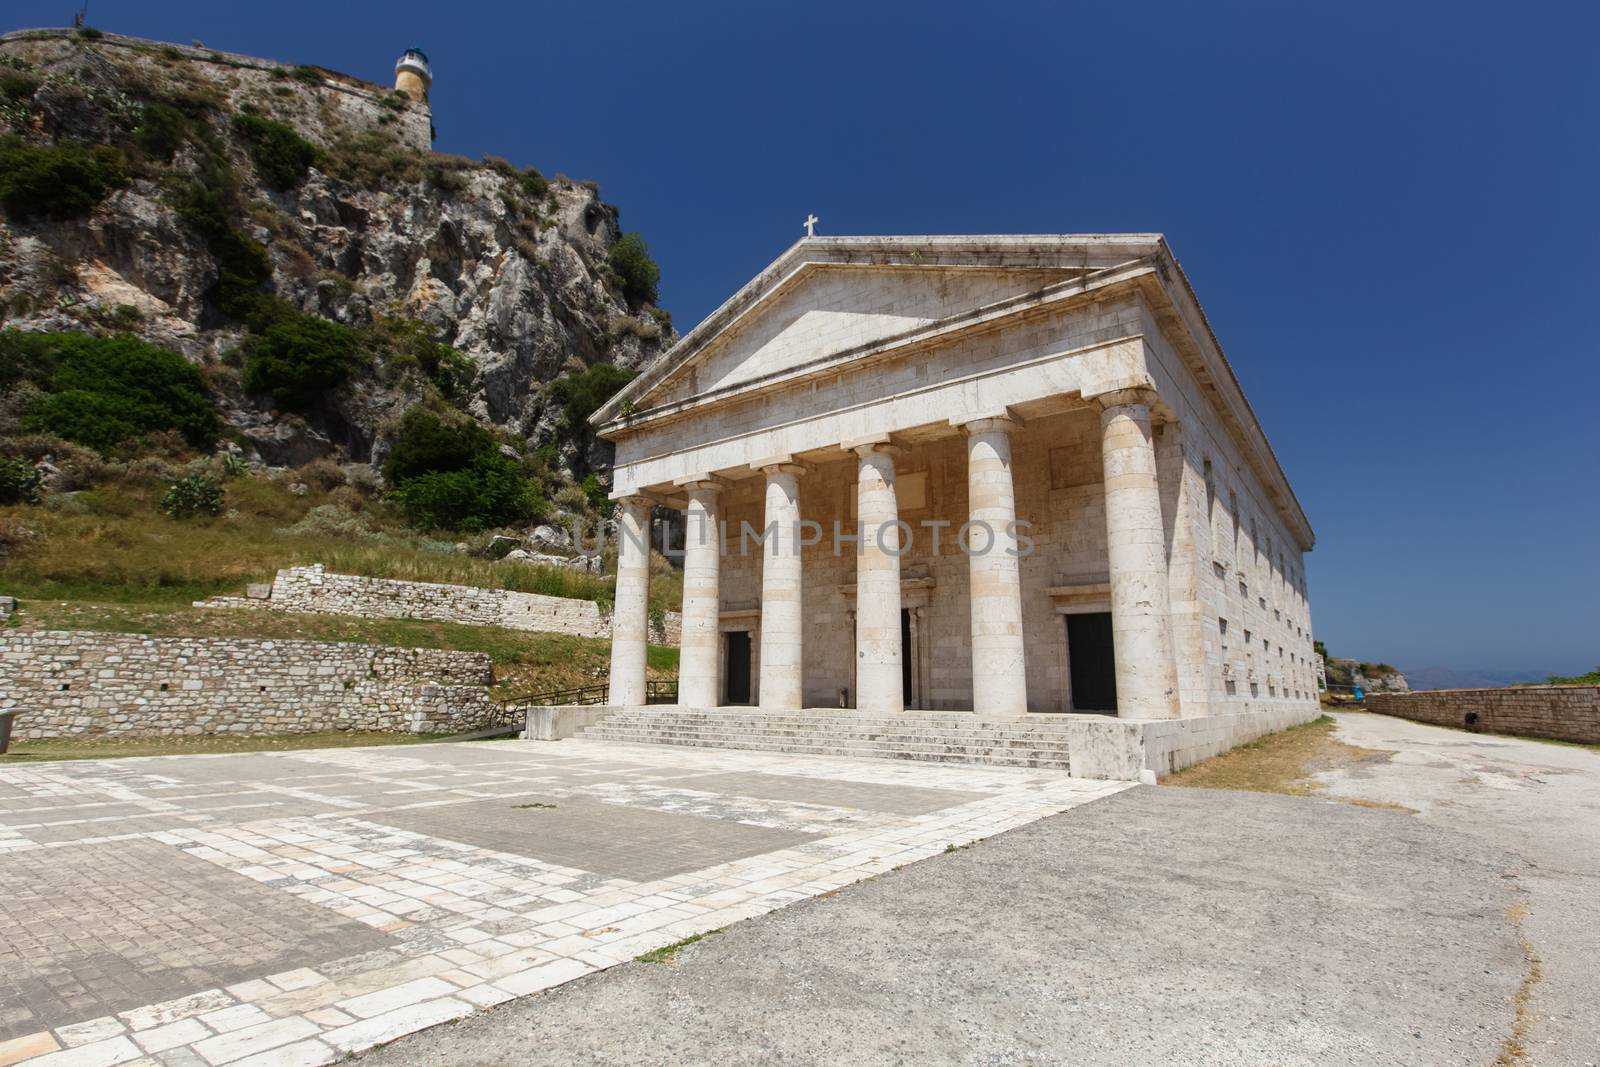 St. George church, Old Fortress, Corfu by Slast20